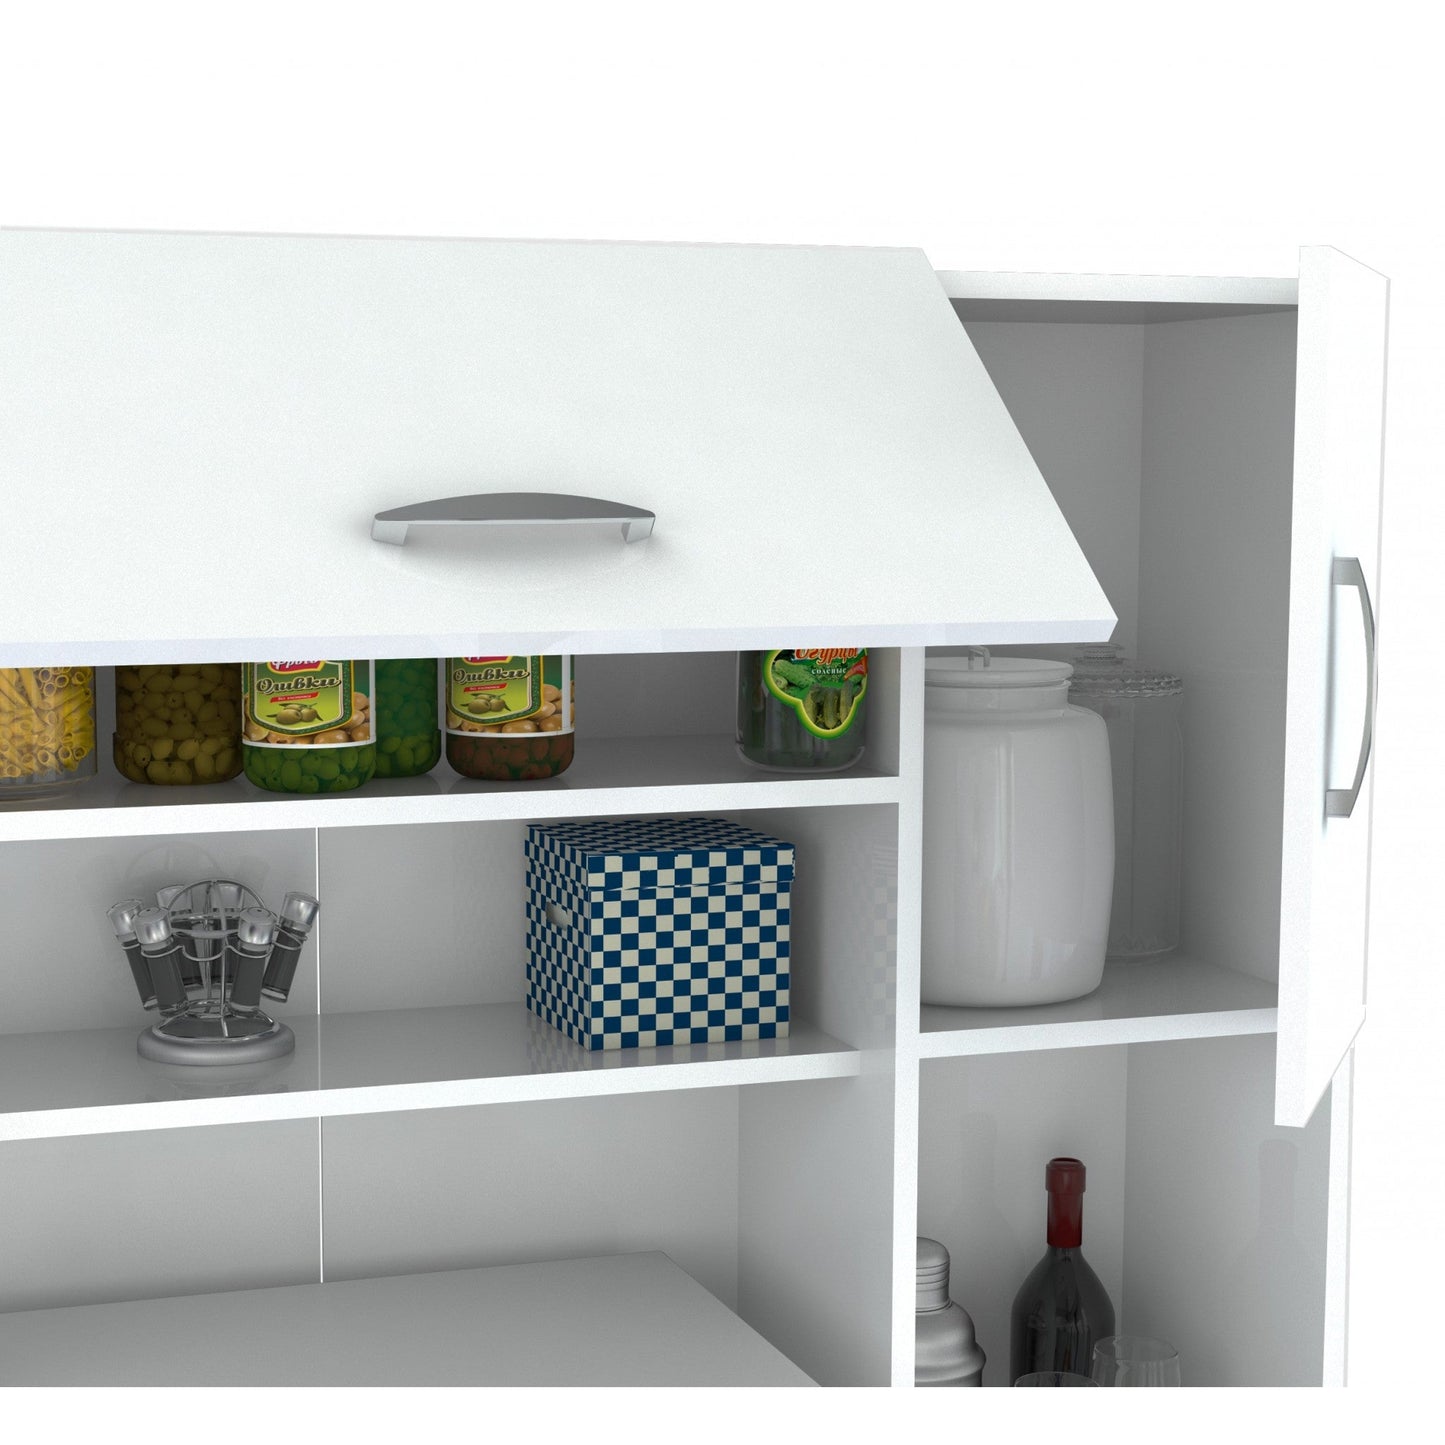 HomeRoots Wood Kitchen Storage Cabinet In White Finish